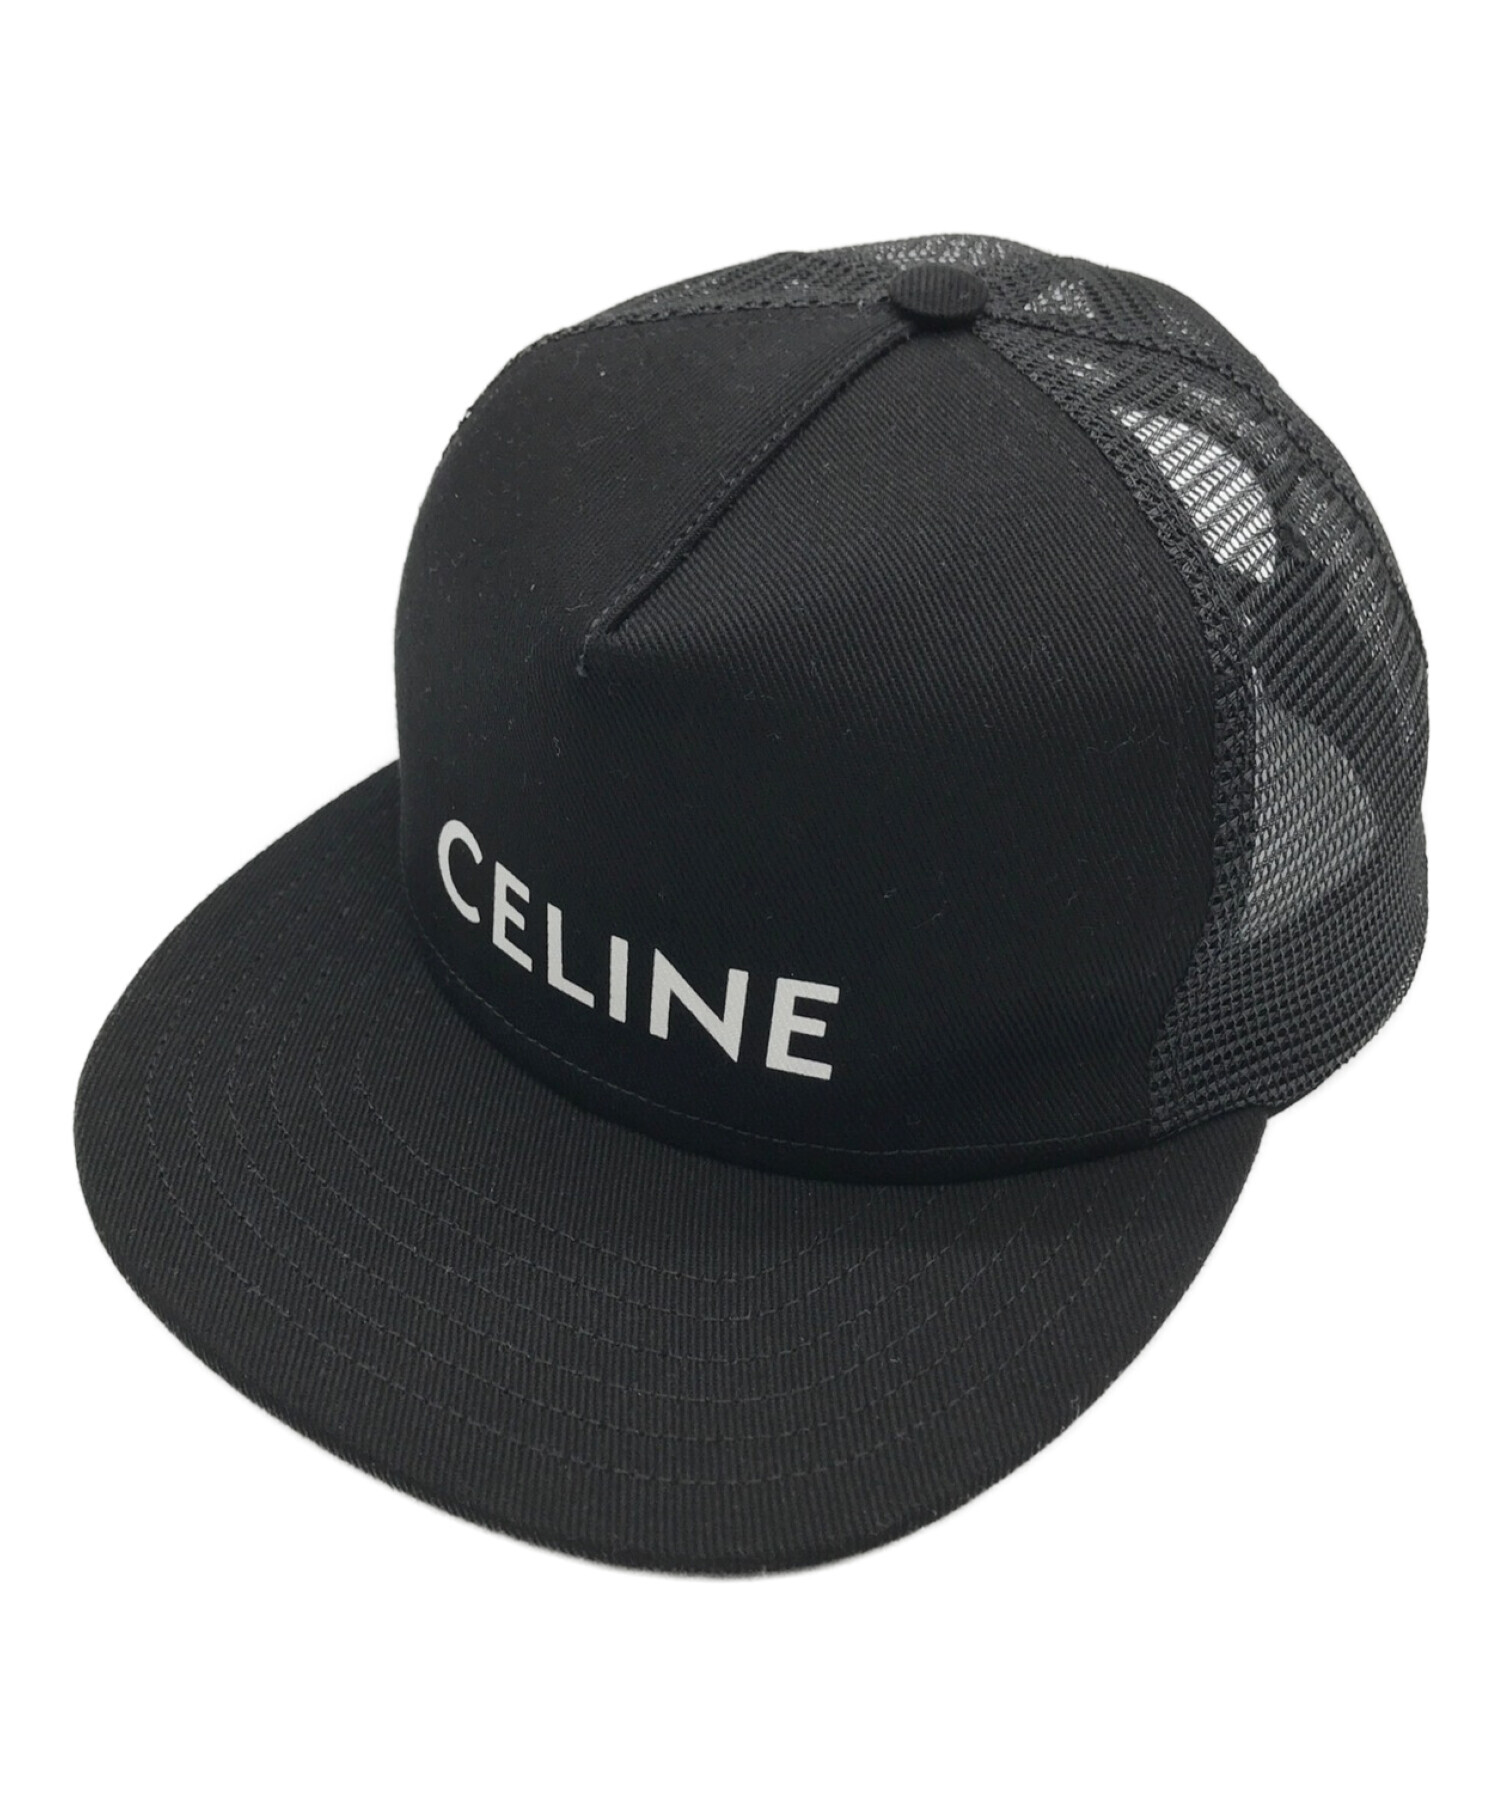 CELINE (セリーヌ) ロゴメッシュキャップ ブラック サイズ:S